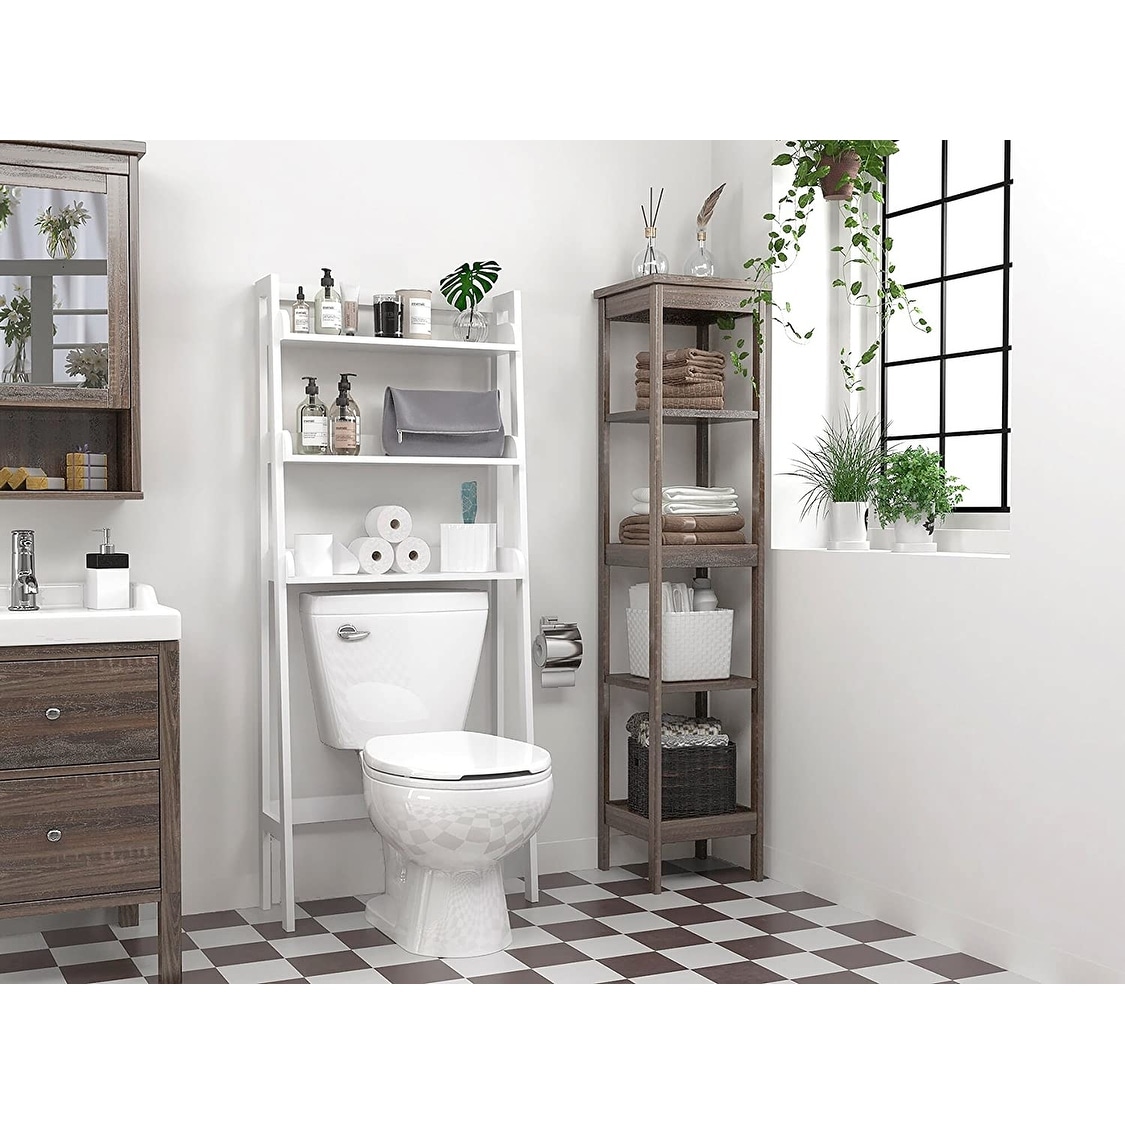 Utex Bathroom Storage Over The Toilet, Bathroom Cabinet Organizer with Adjustable Shelves and Double Doors - Espresso